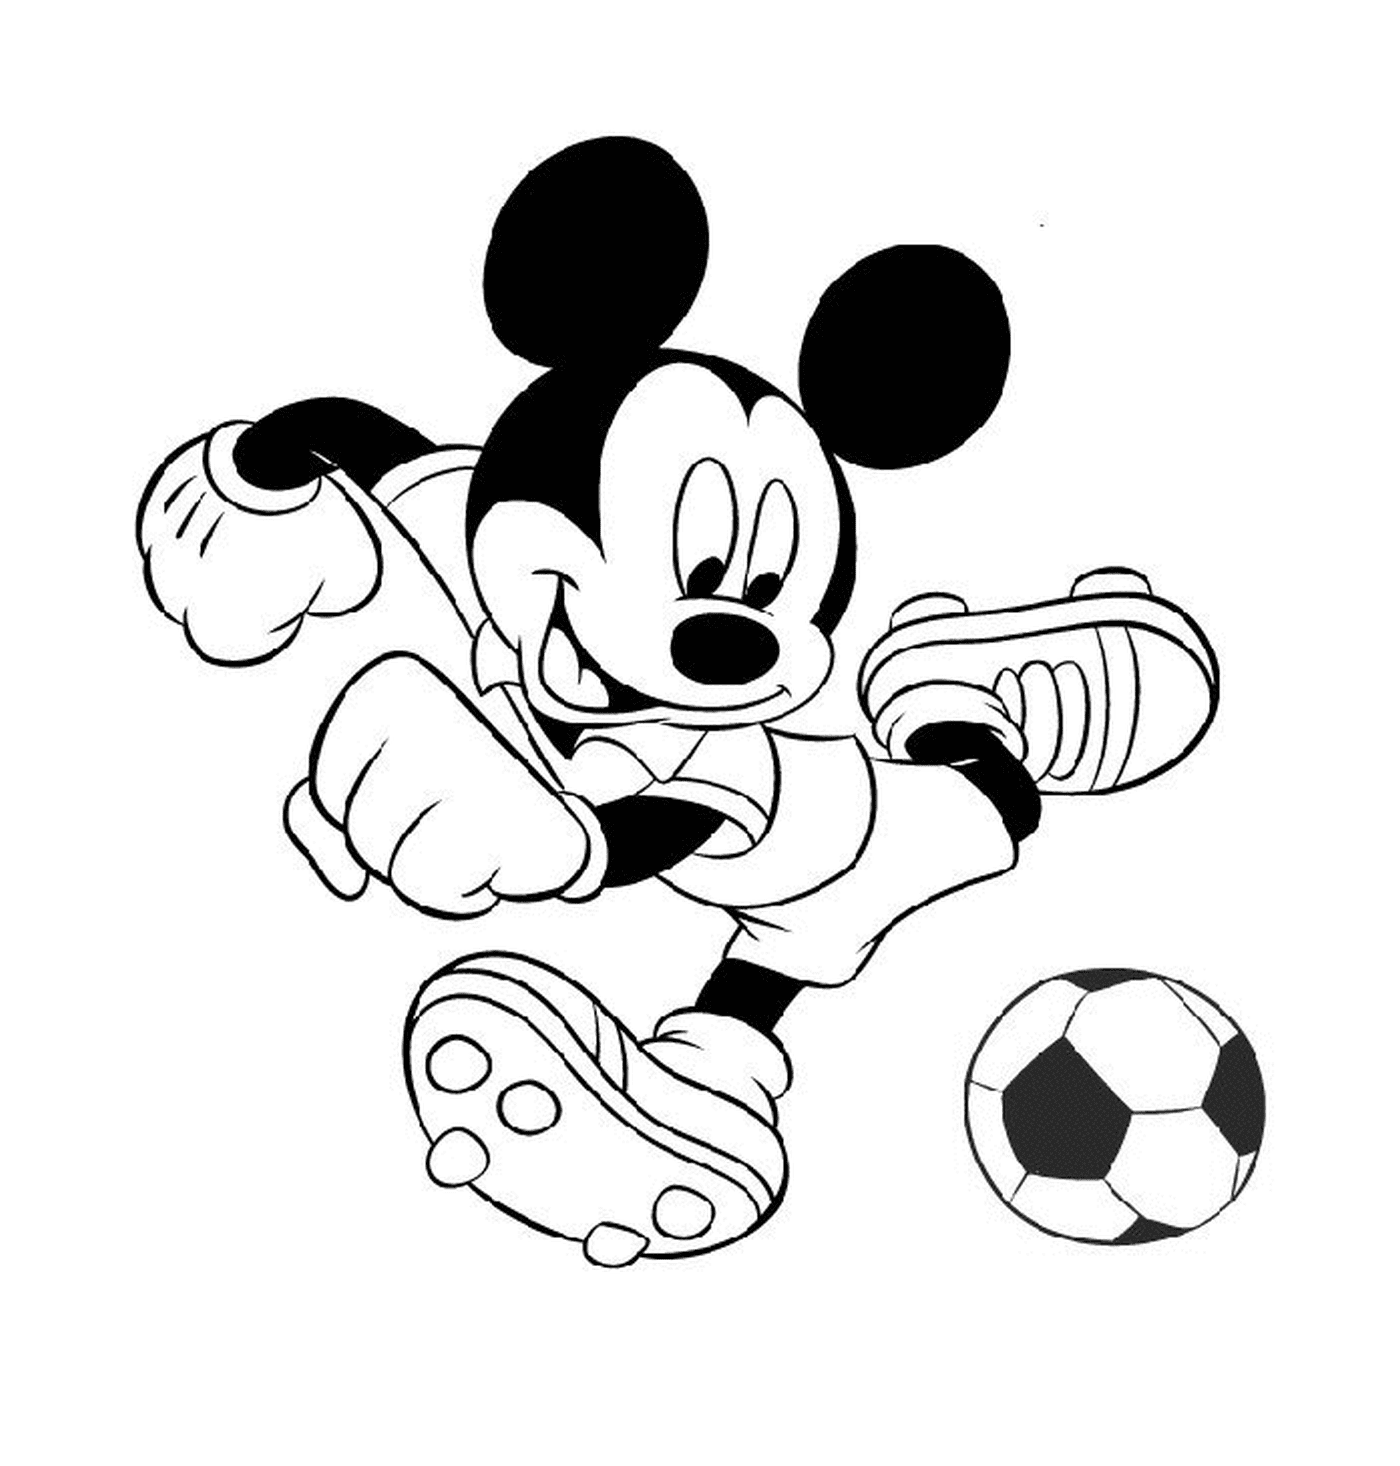  Mickey plays football: kicking a soccer ball 